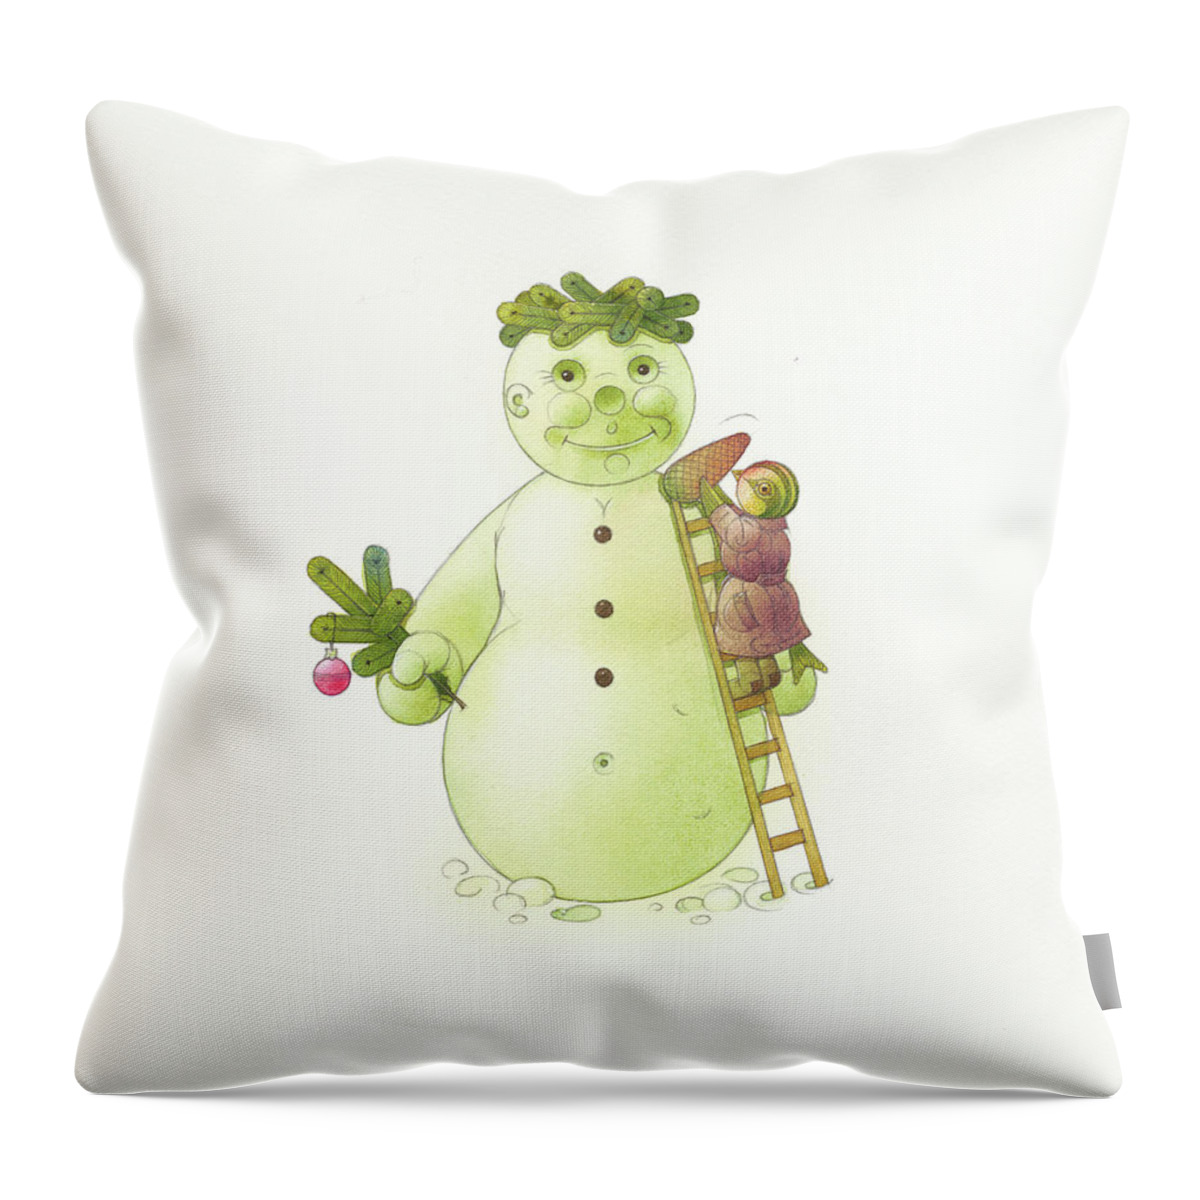 Snowman Winter Snow Bird Christmas Holydays Throw Pillow featuring the drawing Snowman and bird by Kestutis Kasparavicius